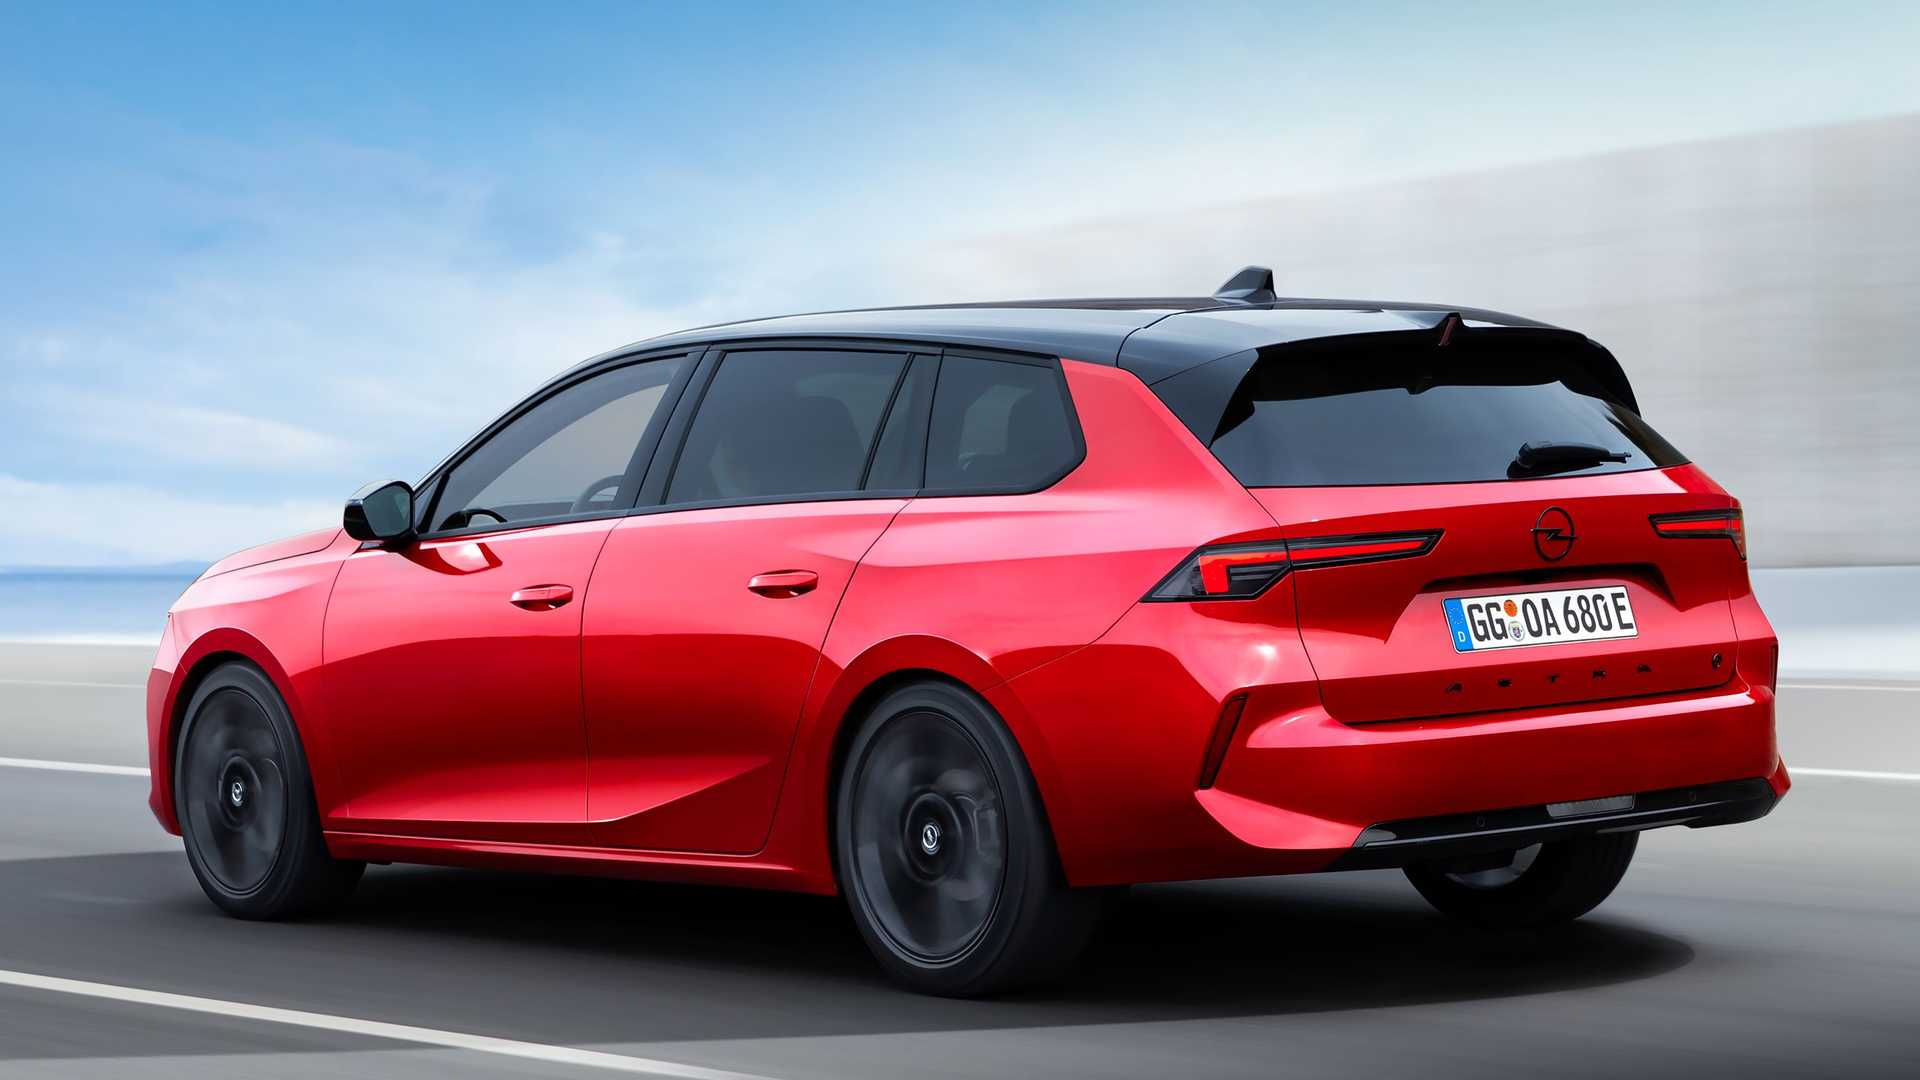 Yeni Opel Astra Electric tanıtıldı: 156 hp güç, 416 km menzil